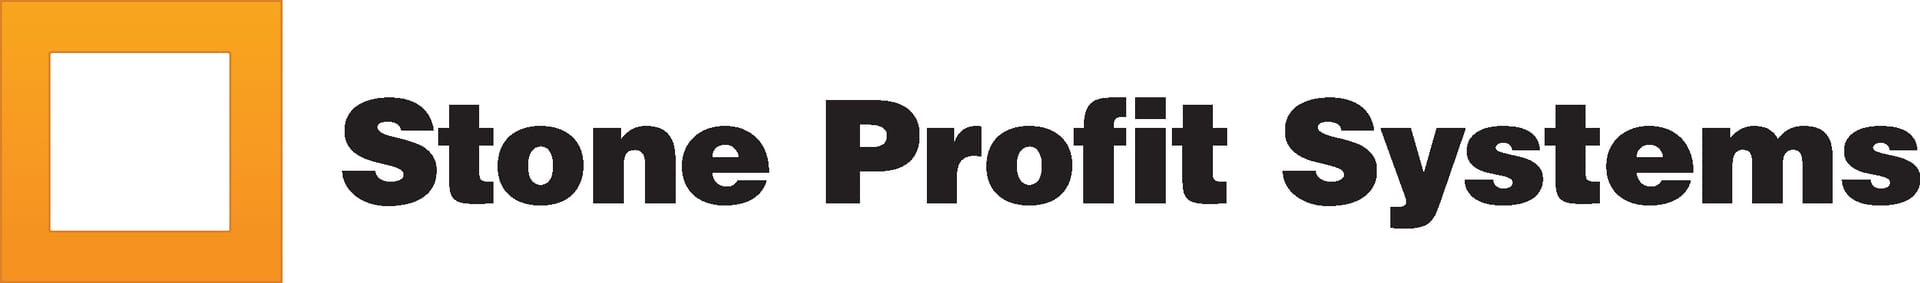 Stone Profit Systems Logo